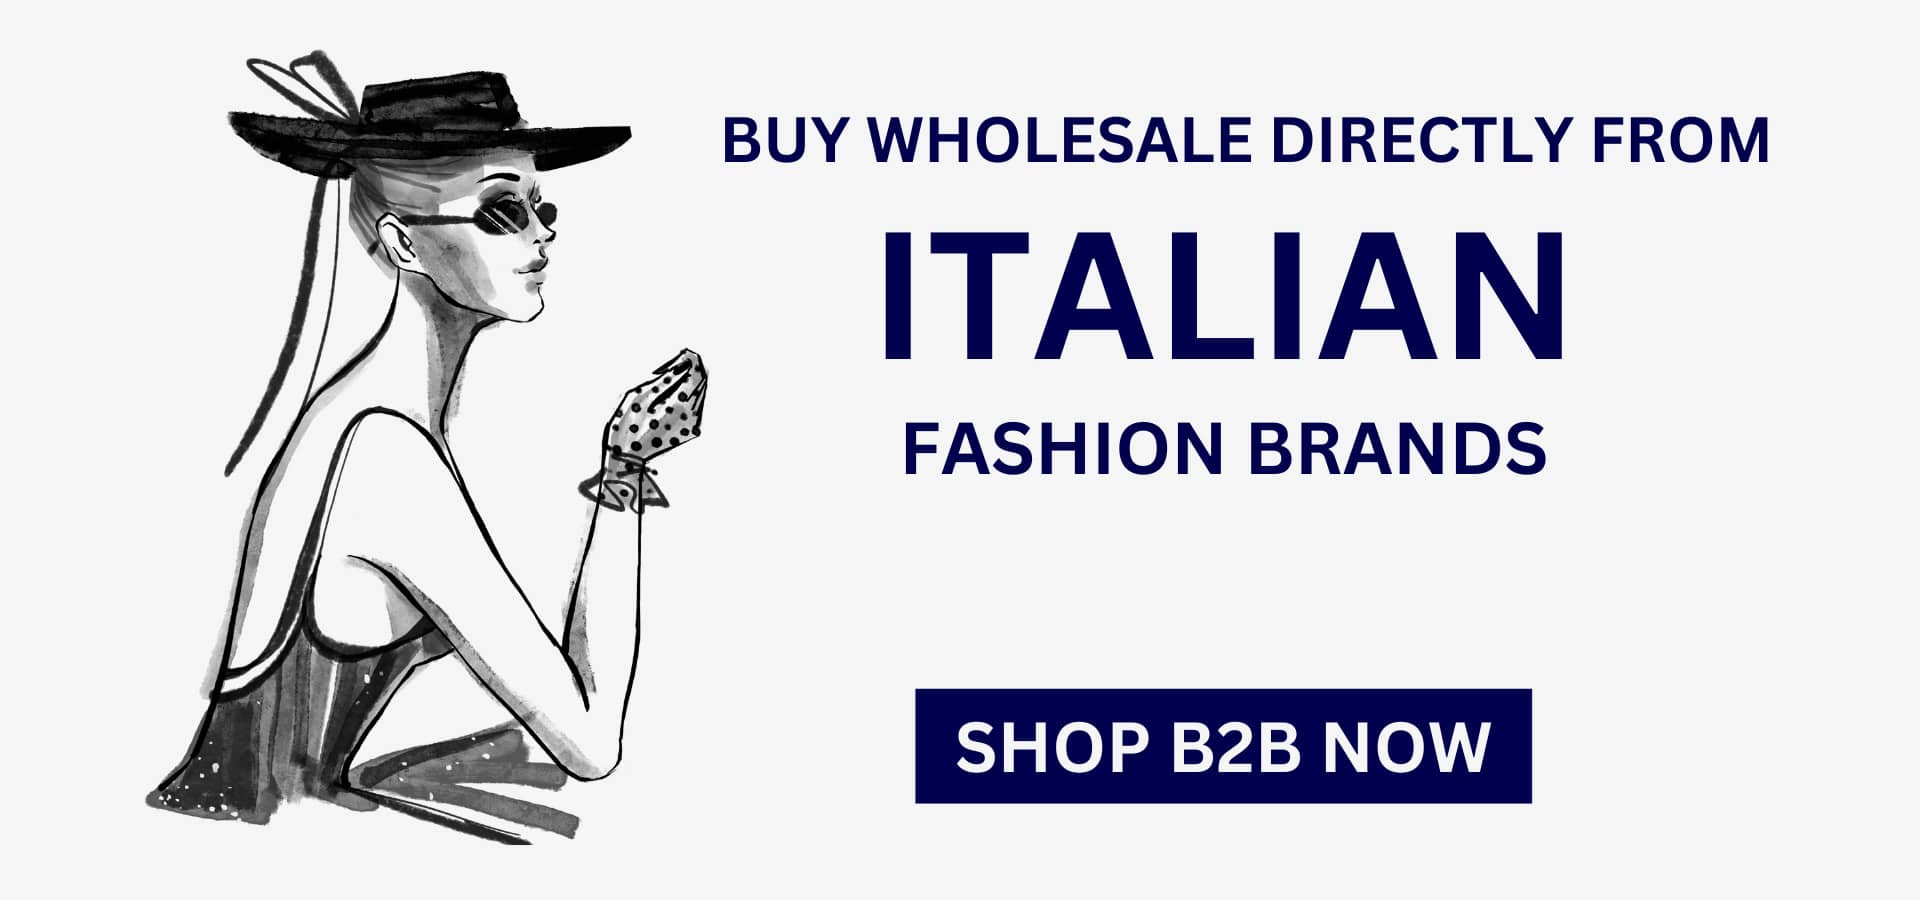 Italian Fashion Brands - Made in Italy Fashion